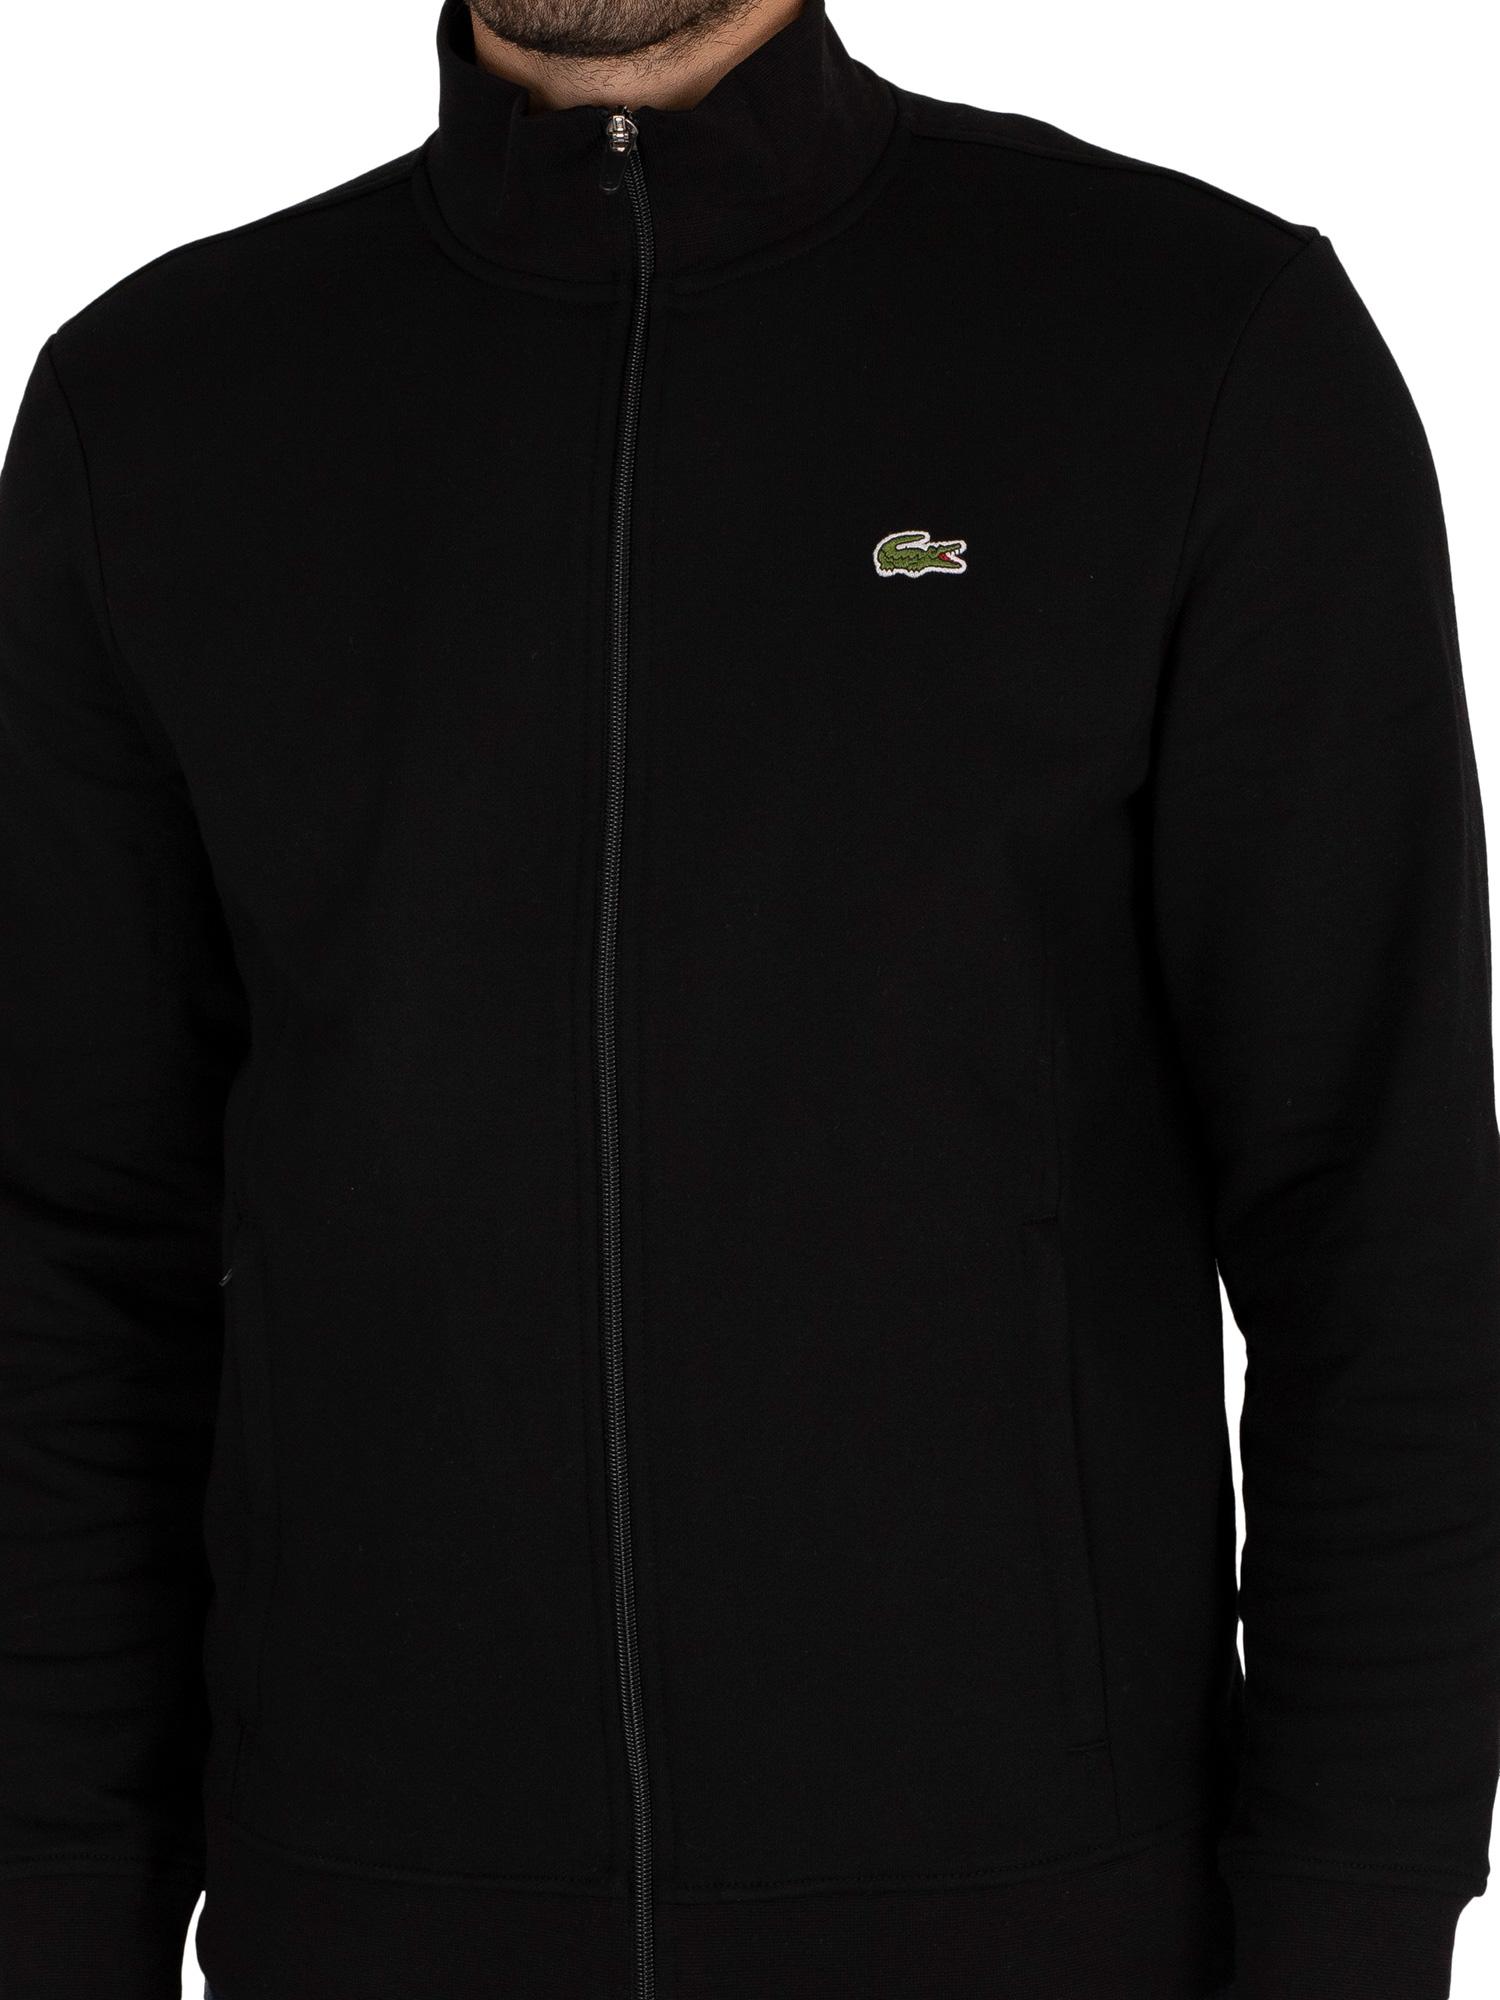 Lacoste Logo Track Jacket in Black for Men - Lyst